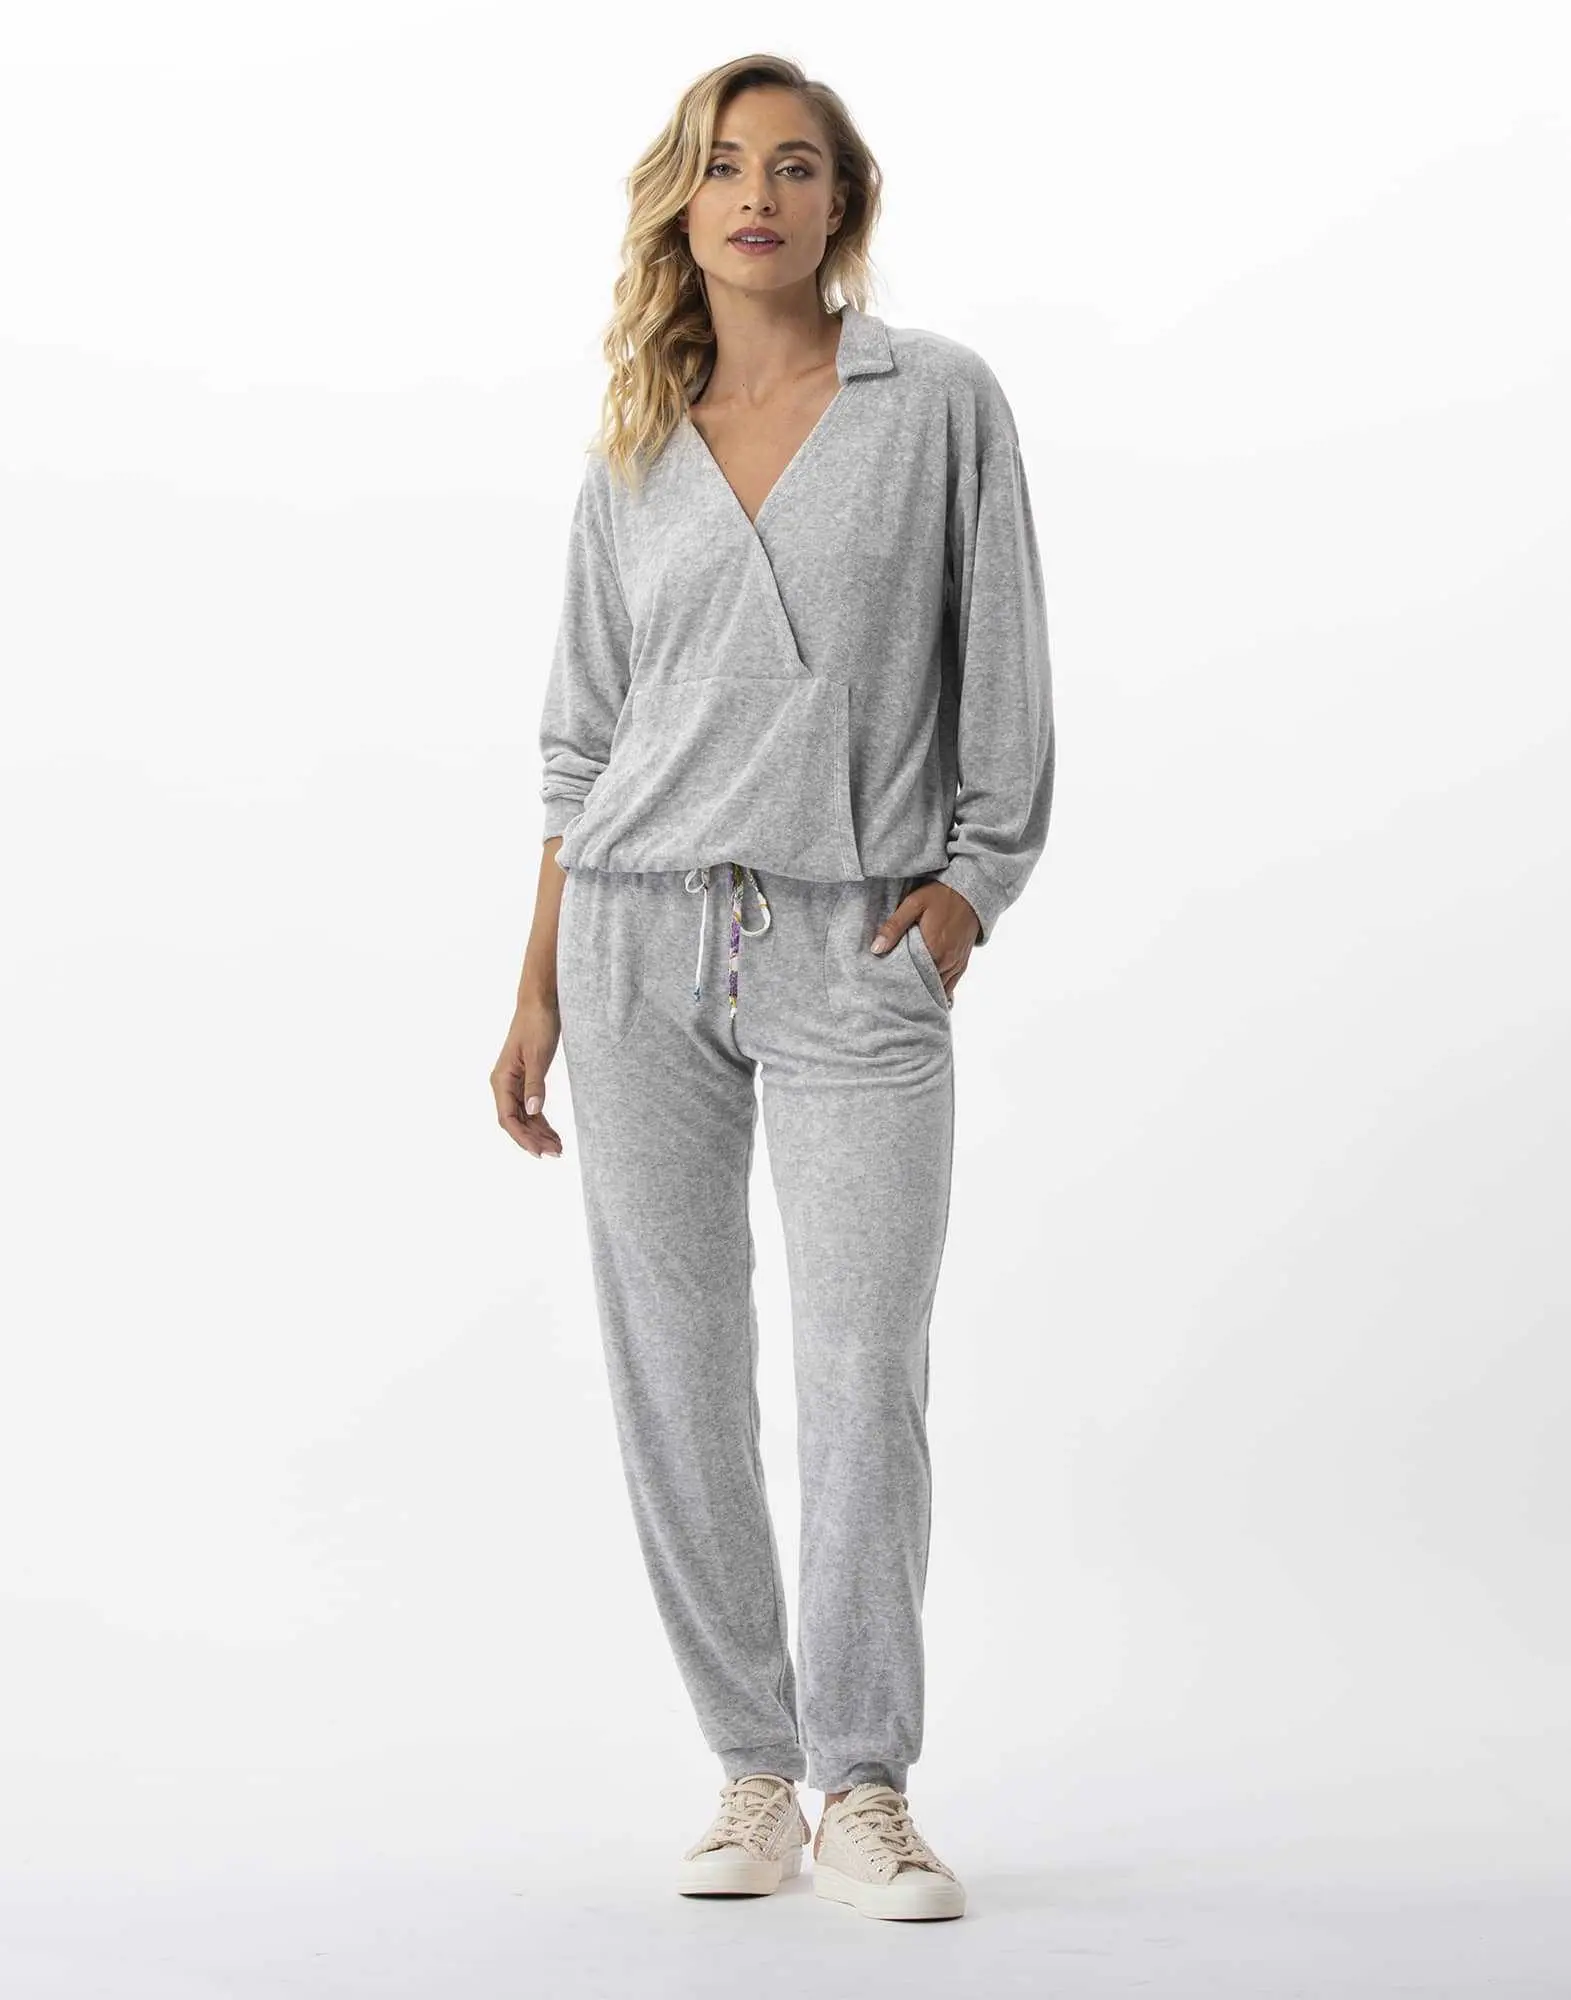 Terry-cloth jogging suit RIVIERA 712 mottled grey | Lingerie le Chat